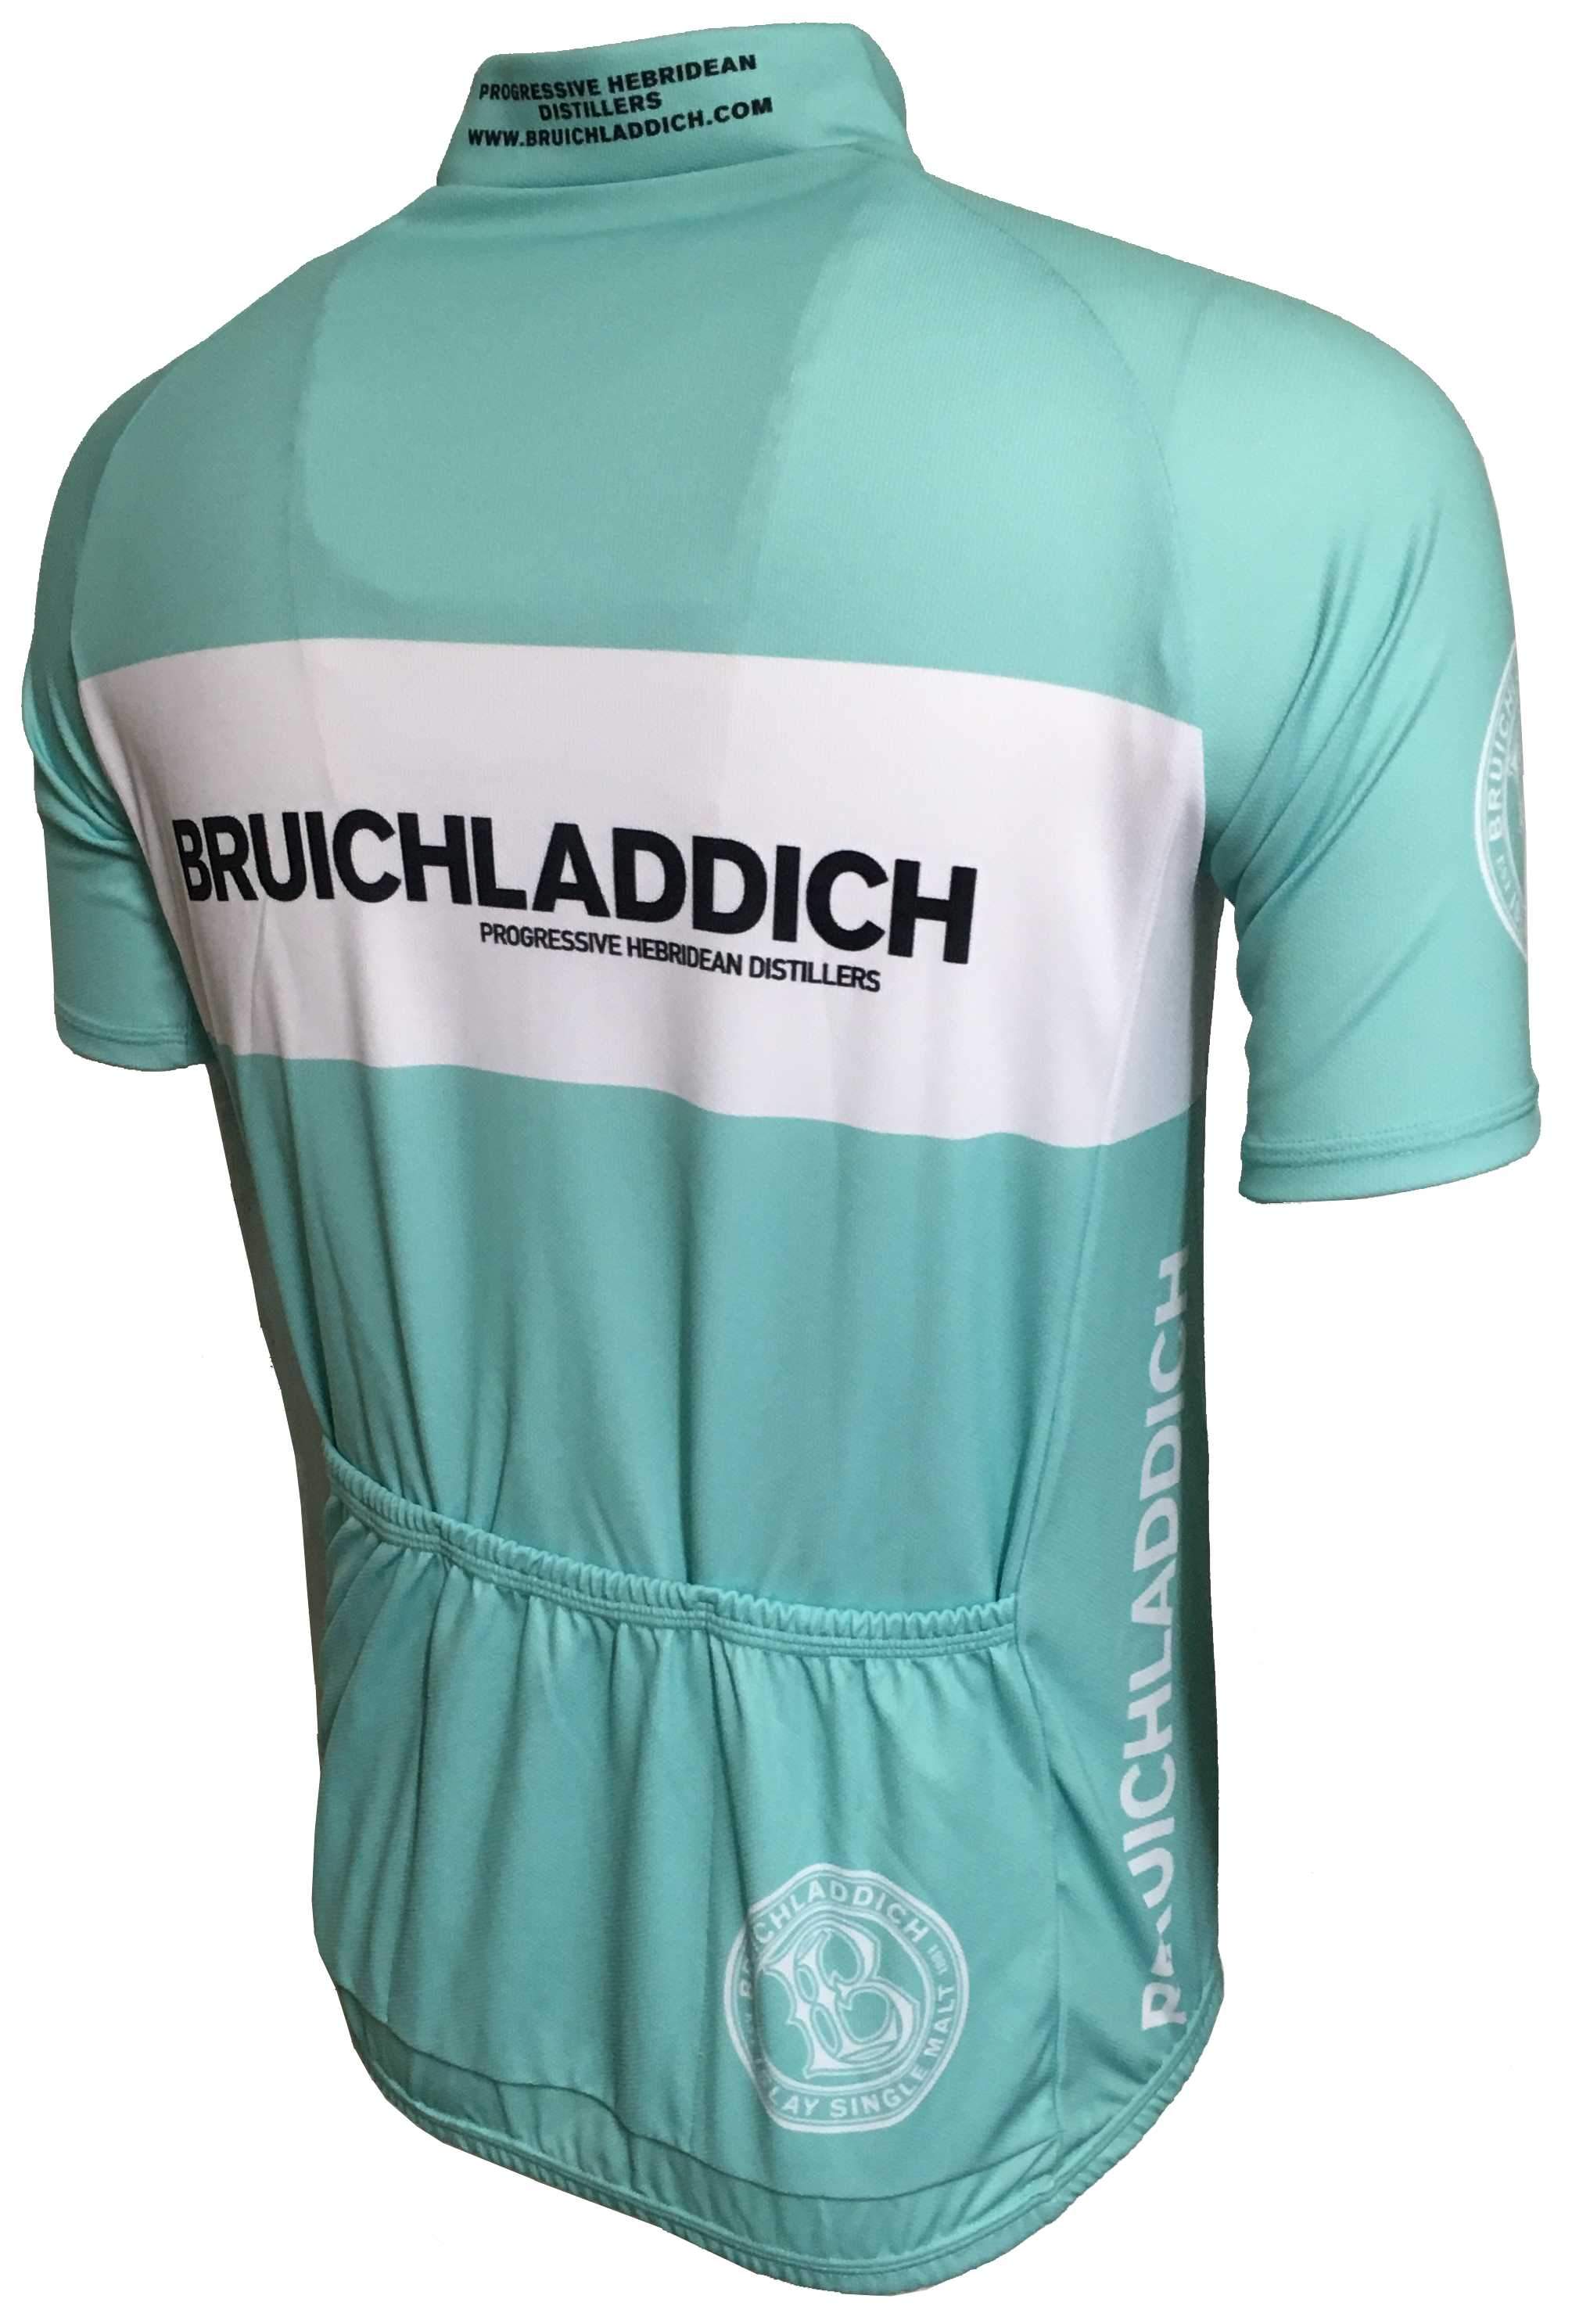 Bruichladdich Retro Cycling Jersey Back